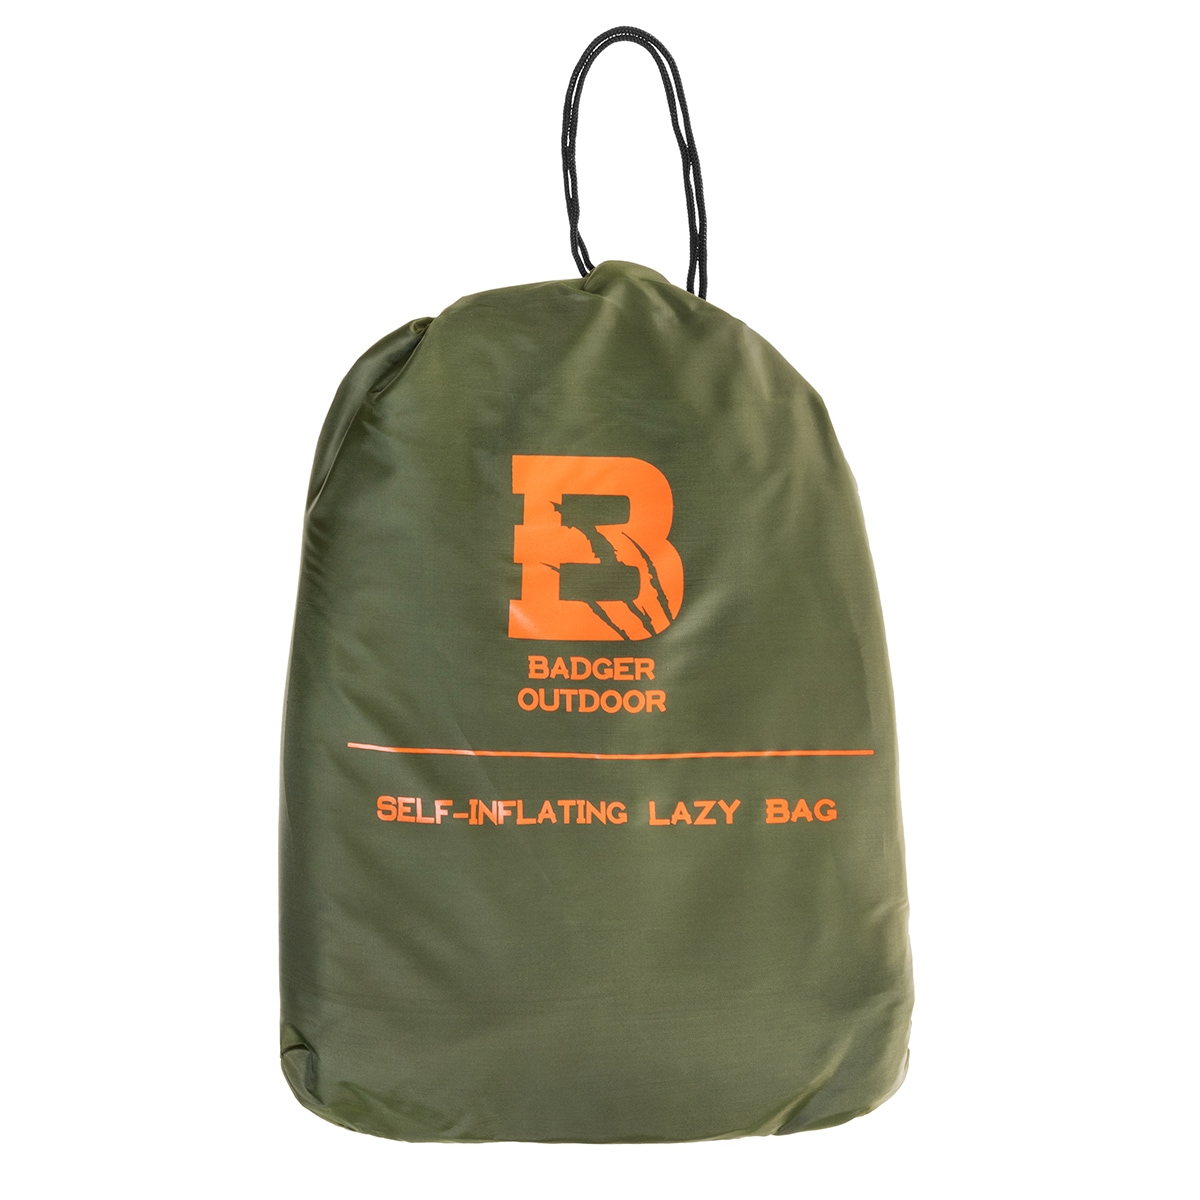 Kanapa dmuchana Badger Outdoor Lazy Bag - Olive 